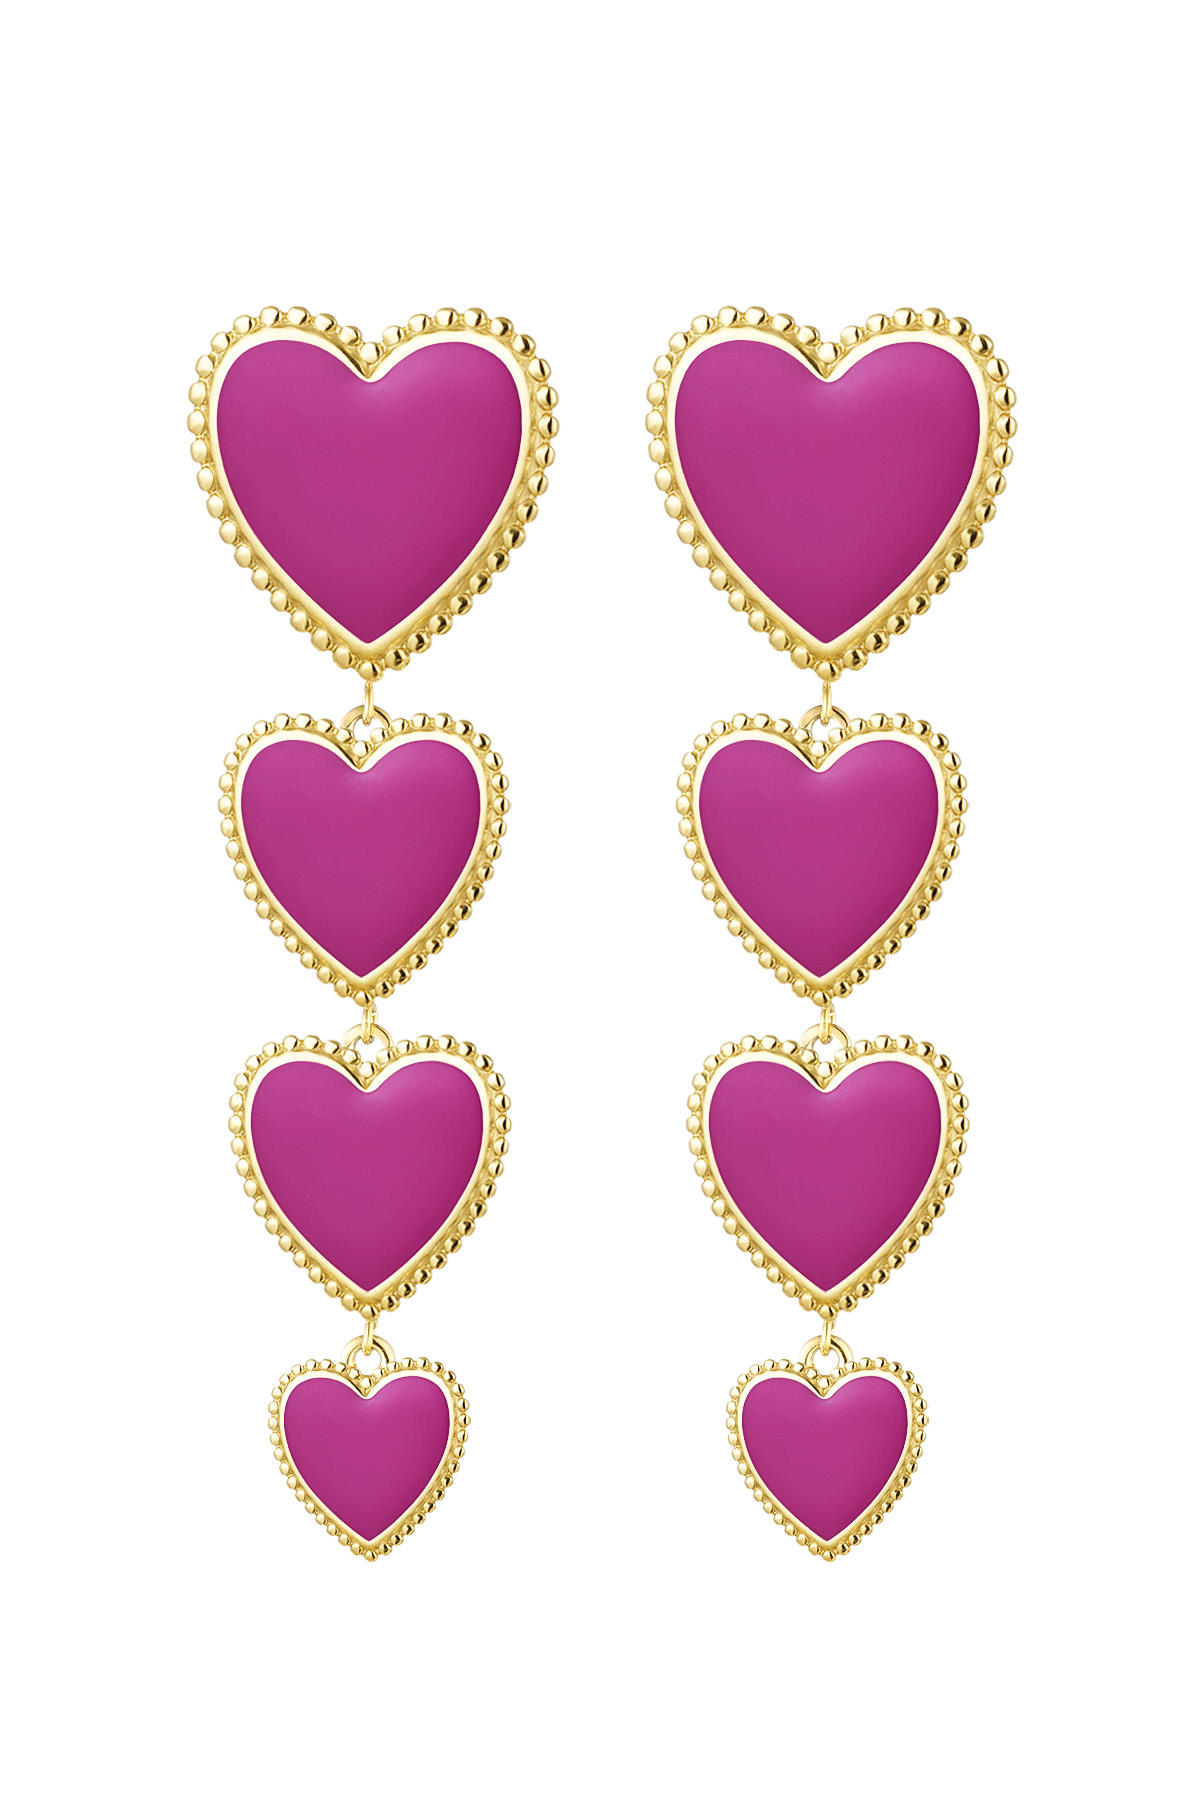 Earrings 4 hearts in a row - fuchsia h5 